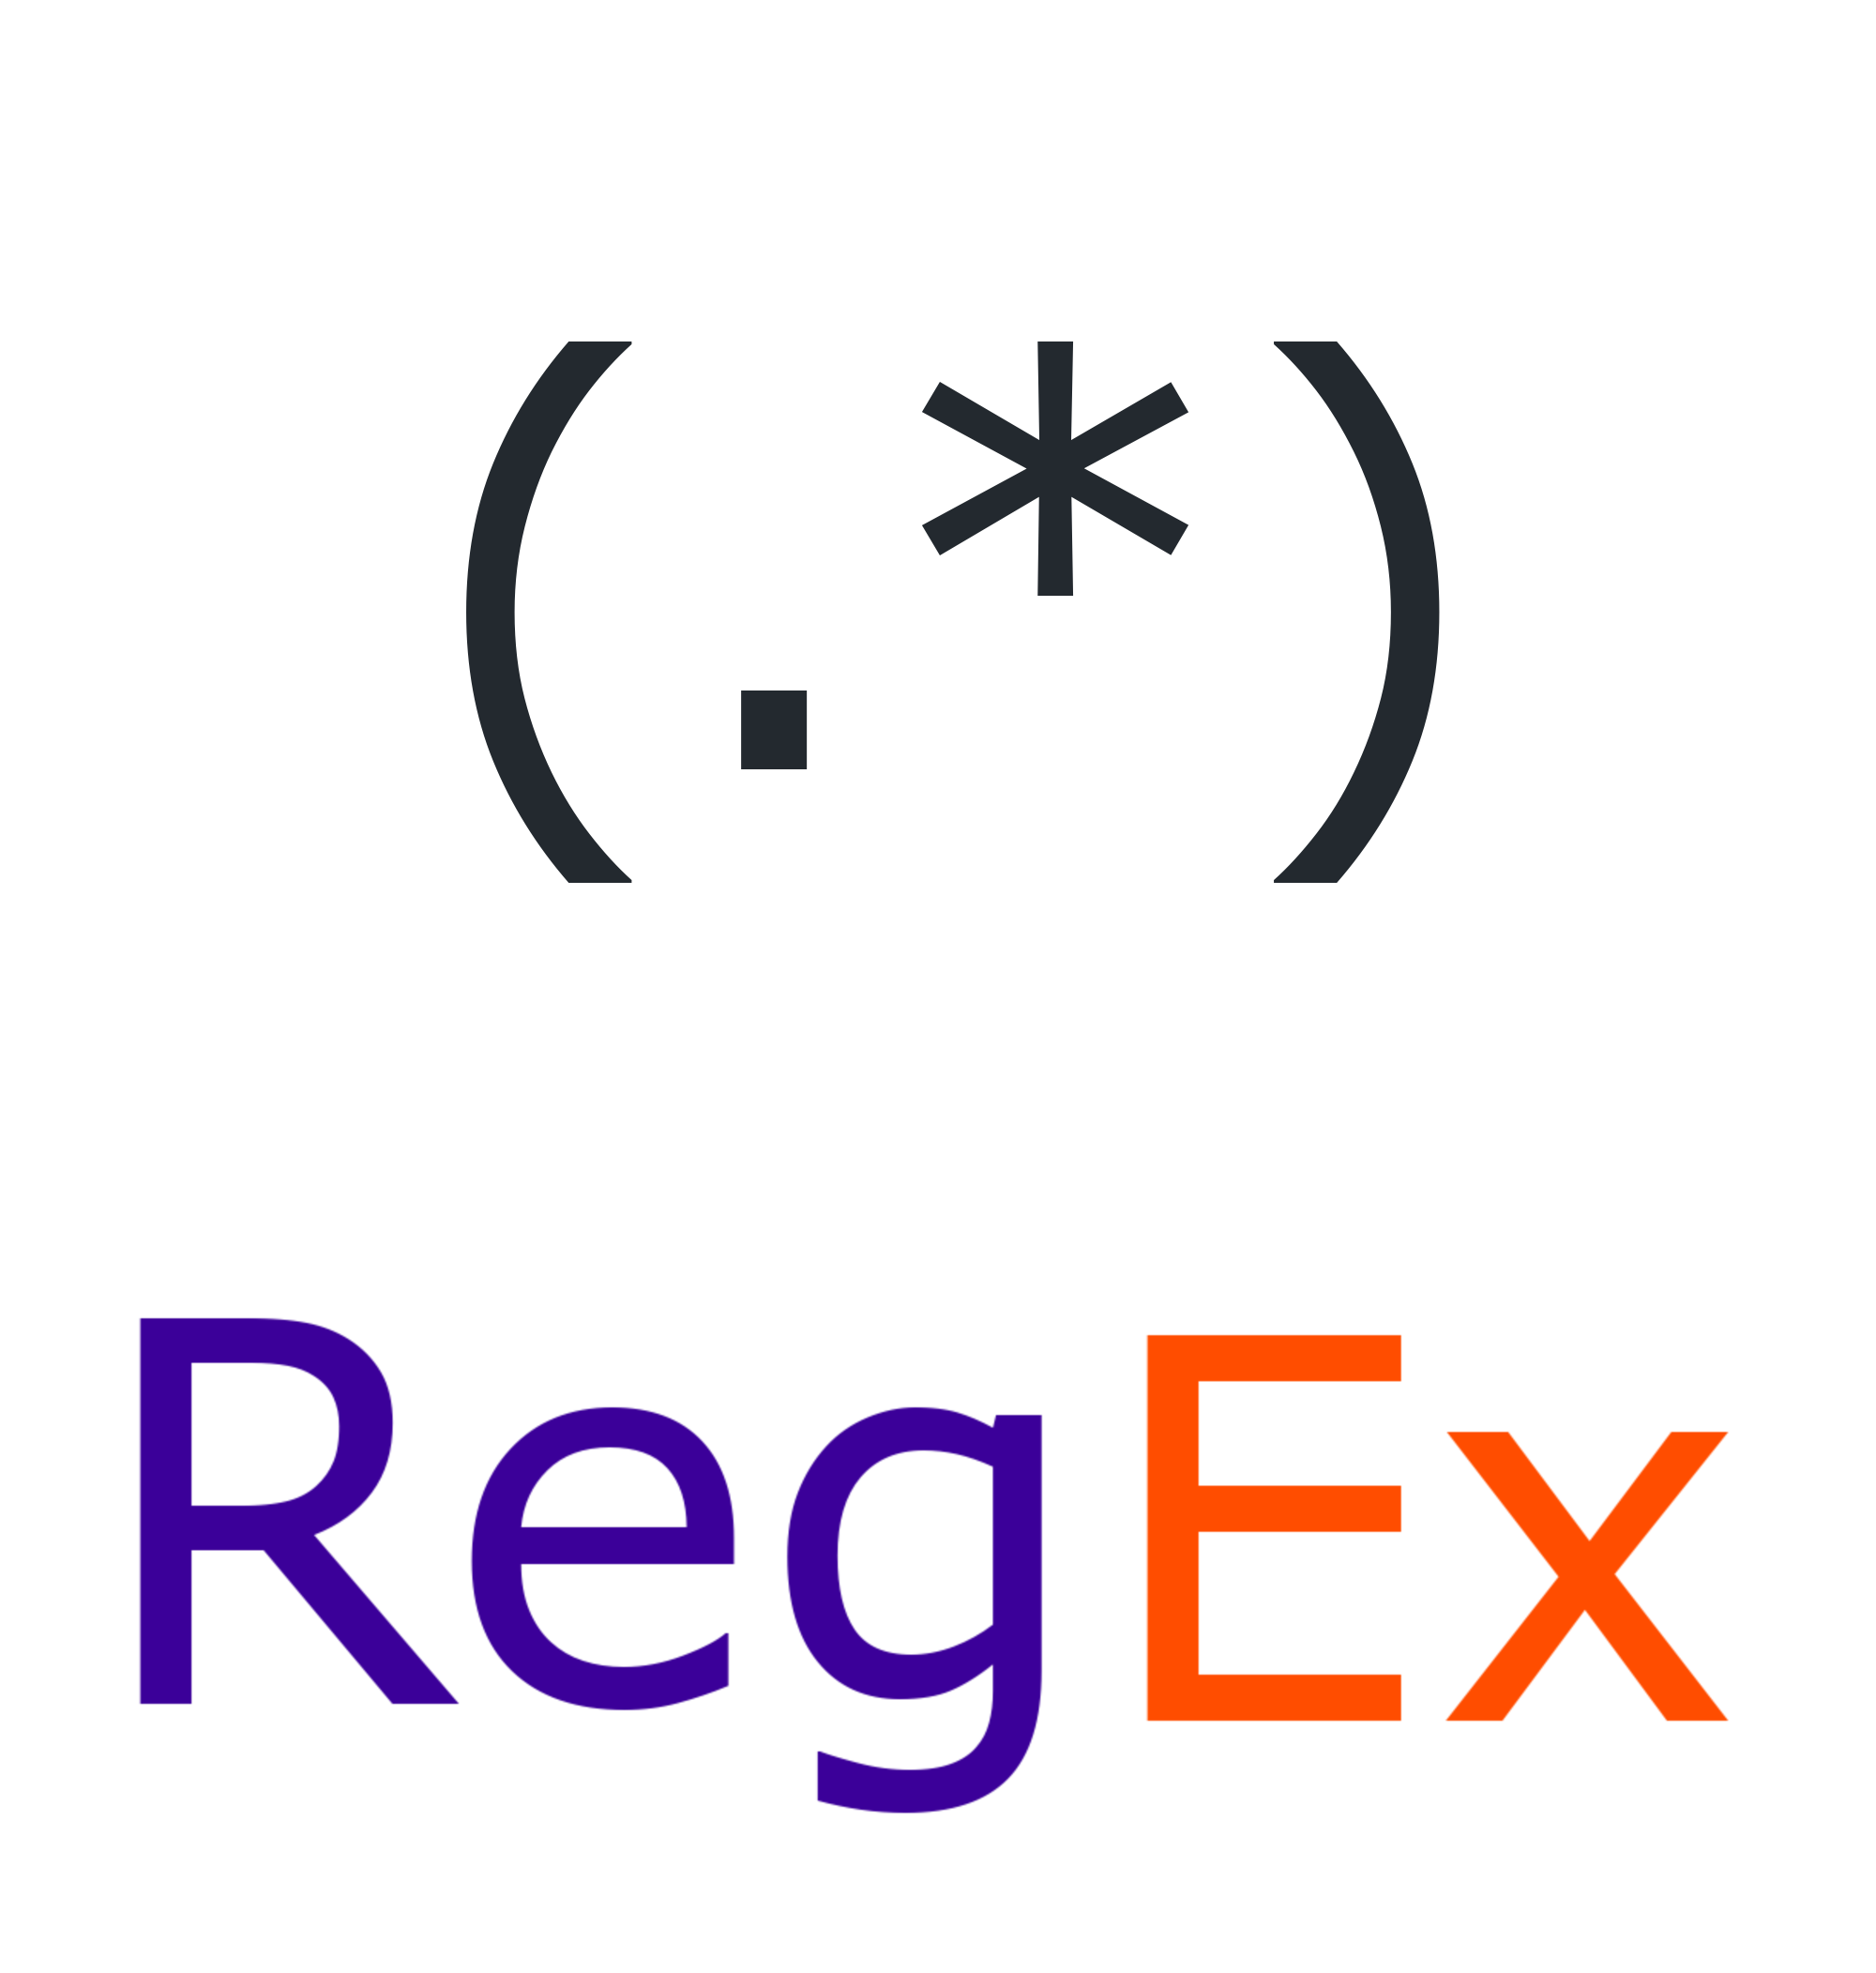 regex